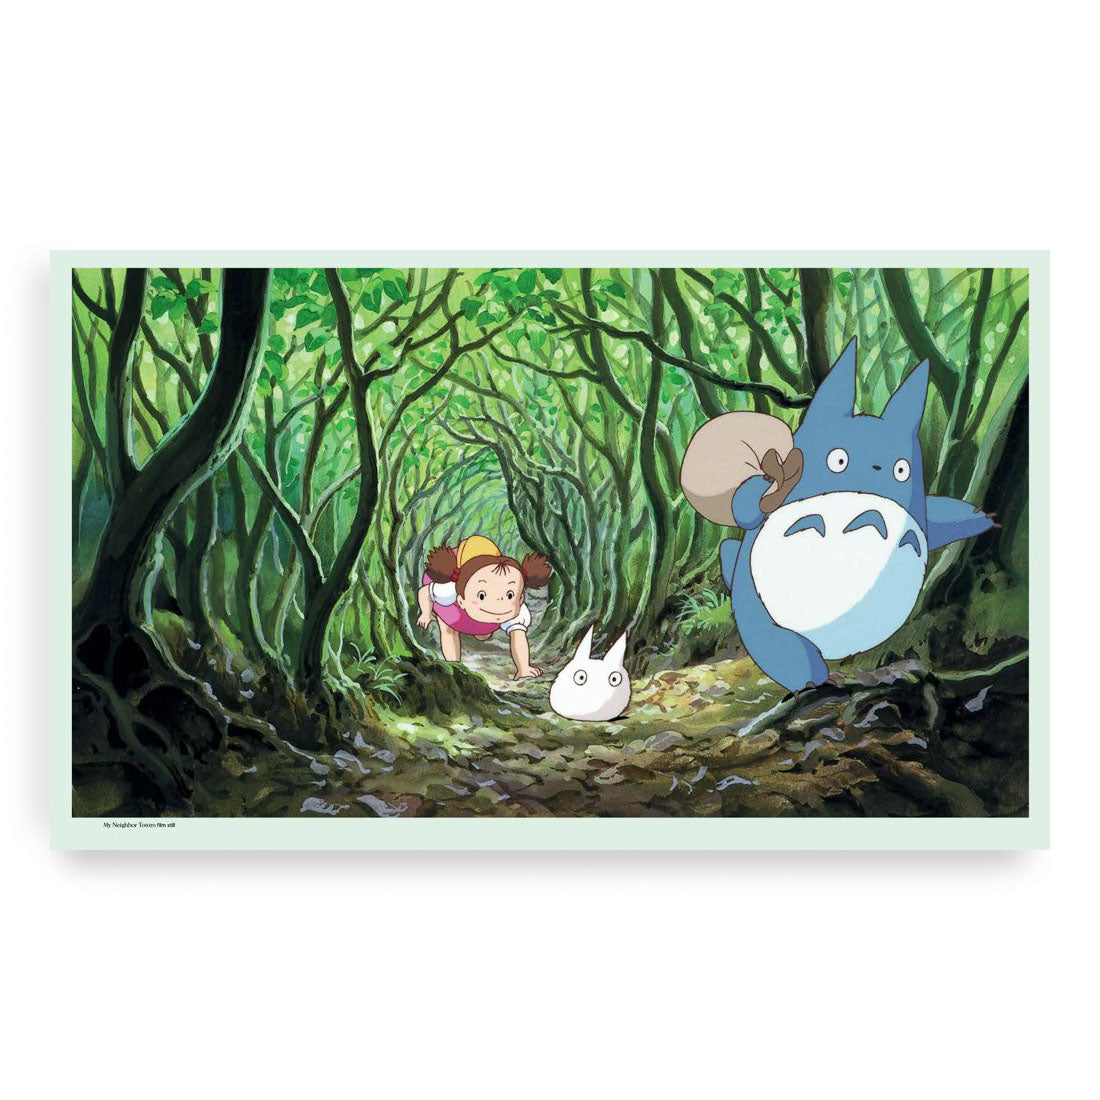 The front cover of Hayao Miyazaki